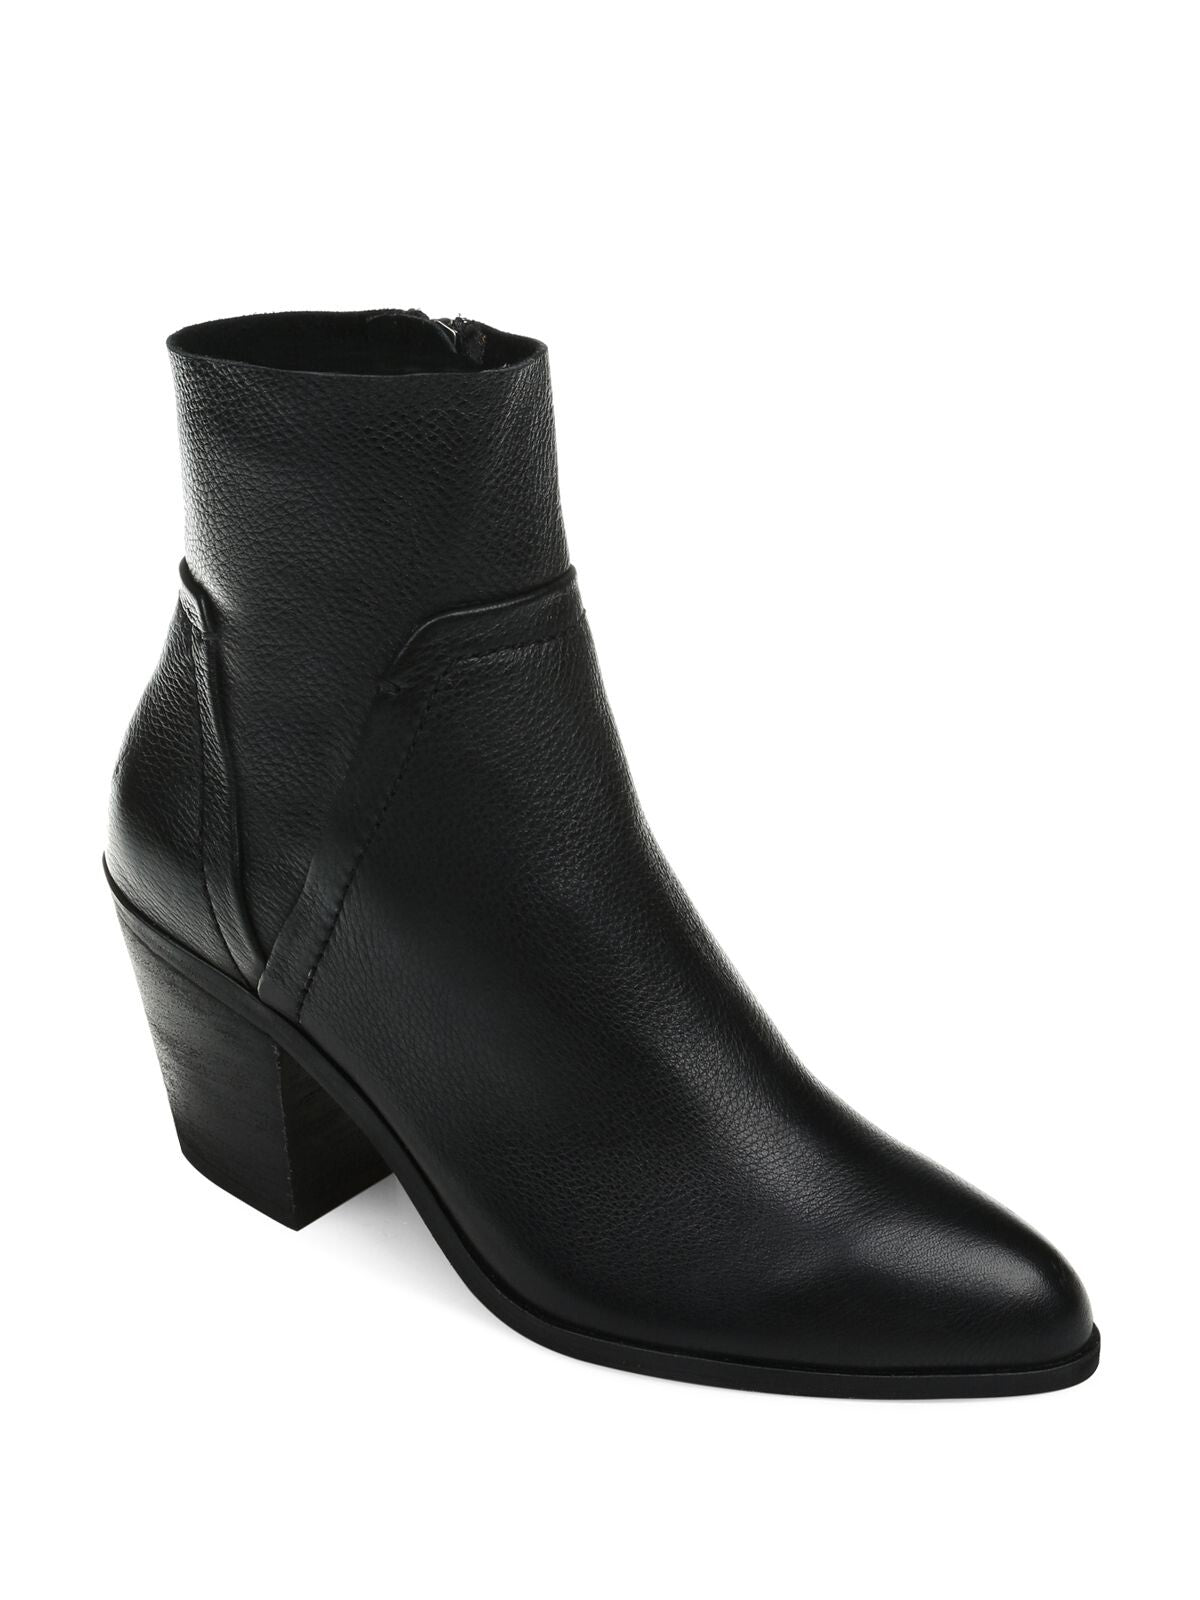 SPLENDID Womens Black Cushioned Cherie Round Toe Block Heel Zip-Up Leather Booties 10